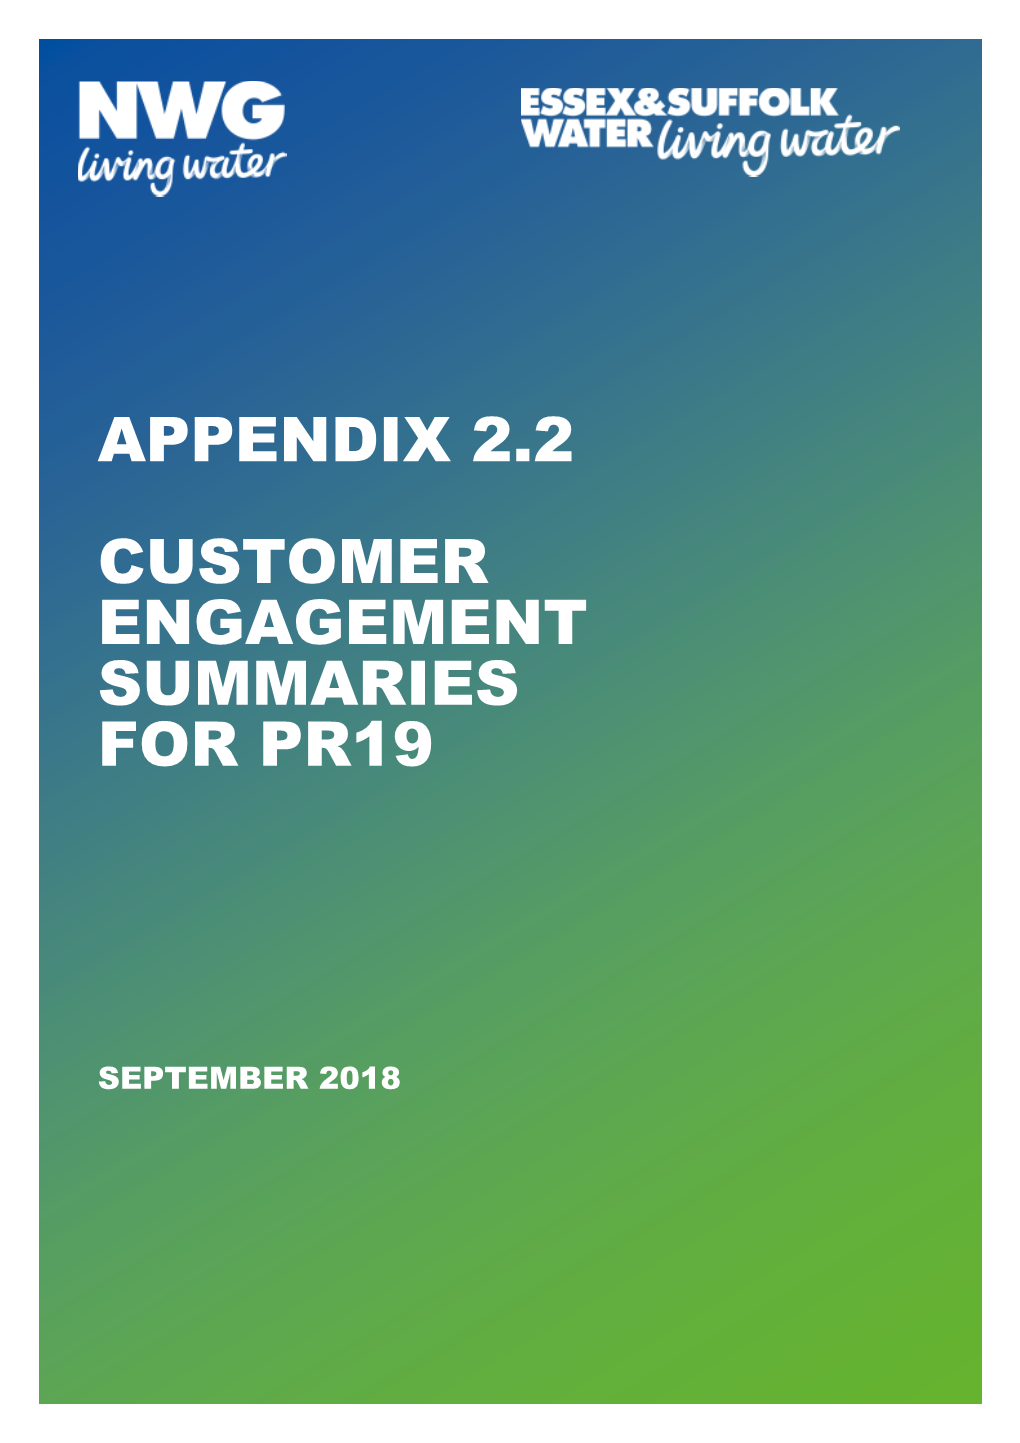 Appendix 2.2 Customer Engagement Summaries for Pr19